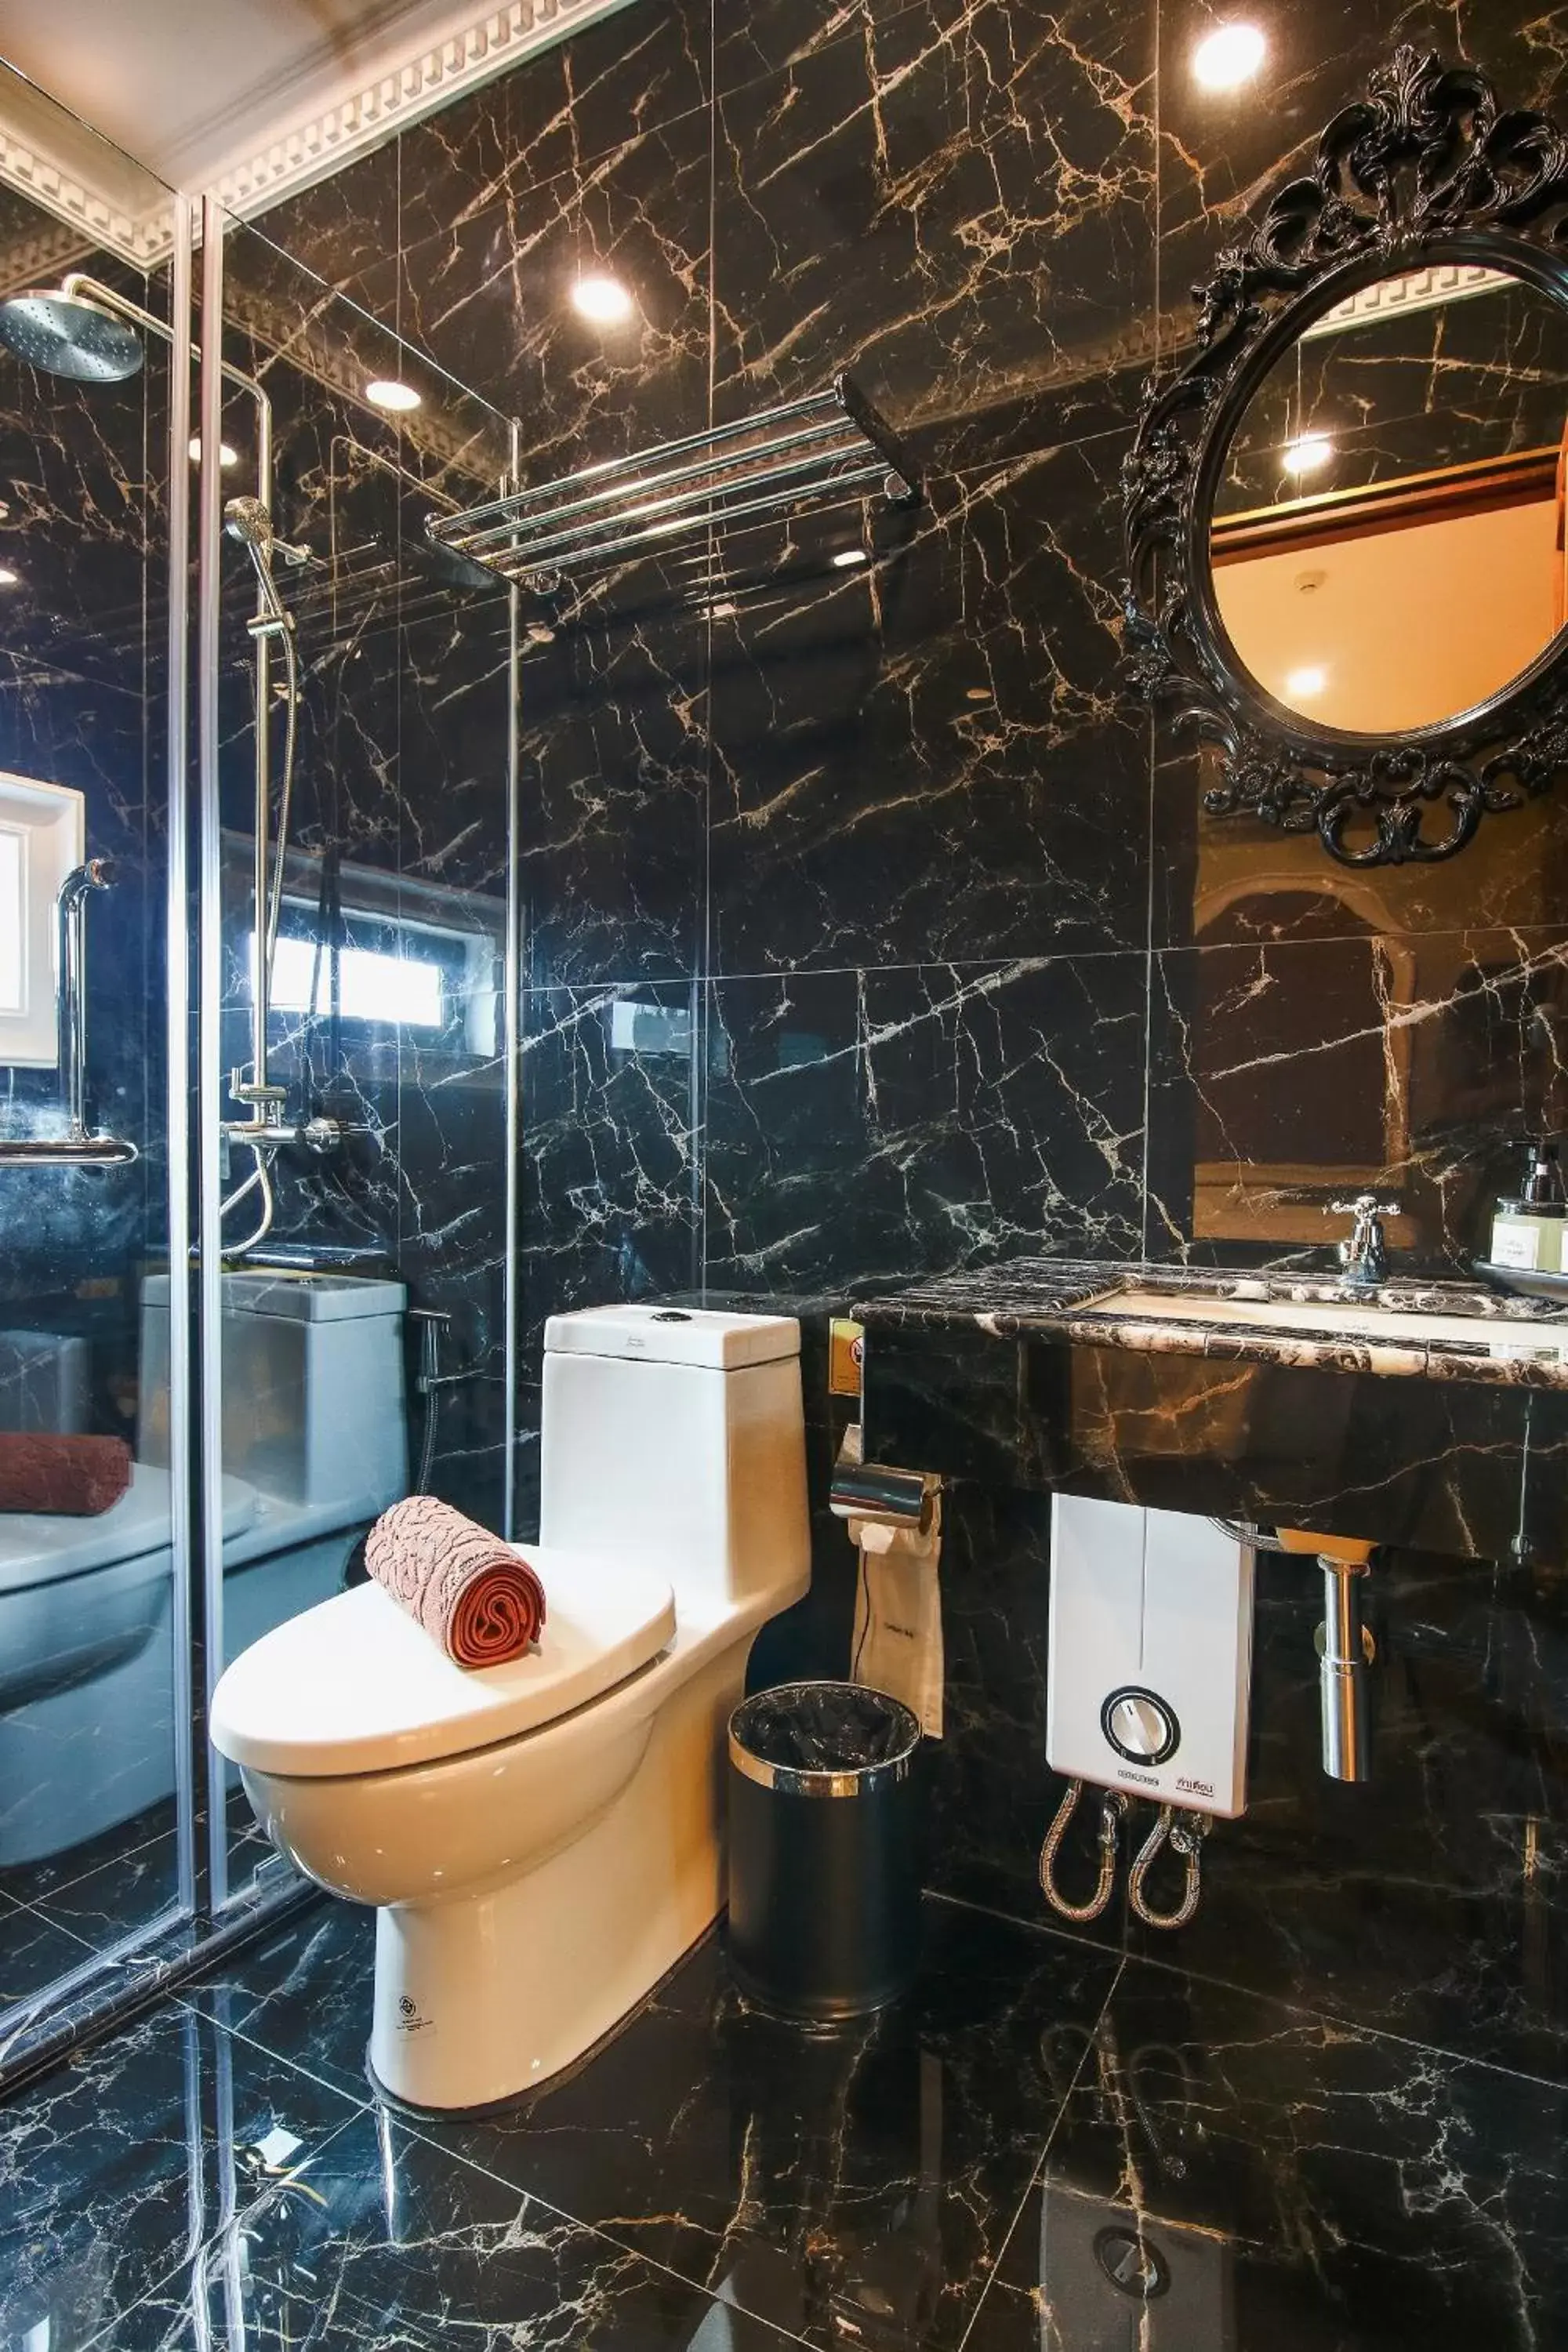 Bathroom in A Villa Hua Hin Hotel